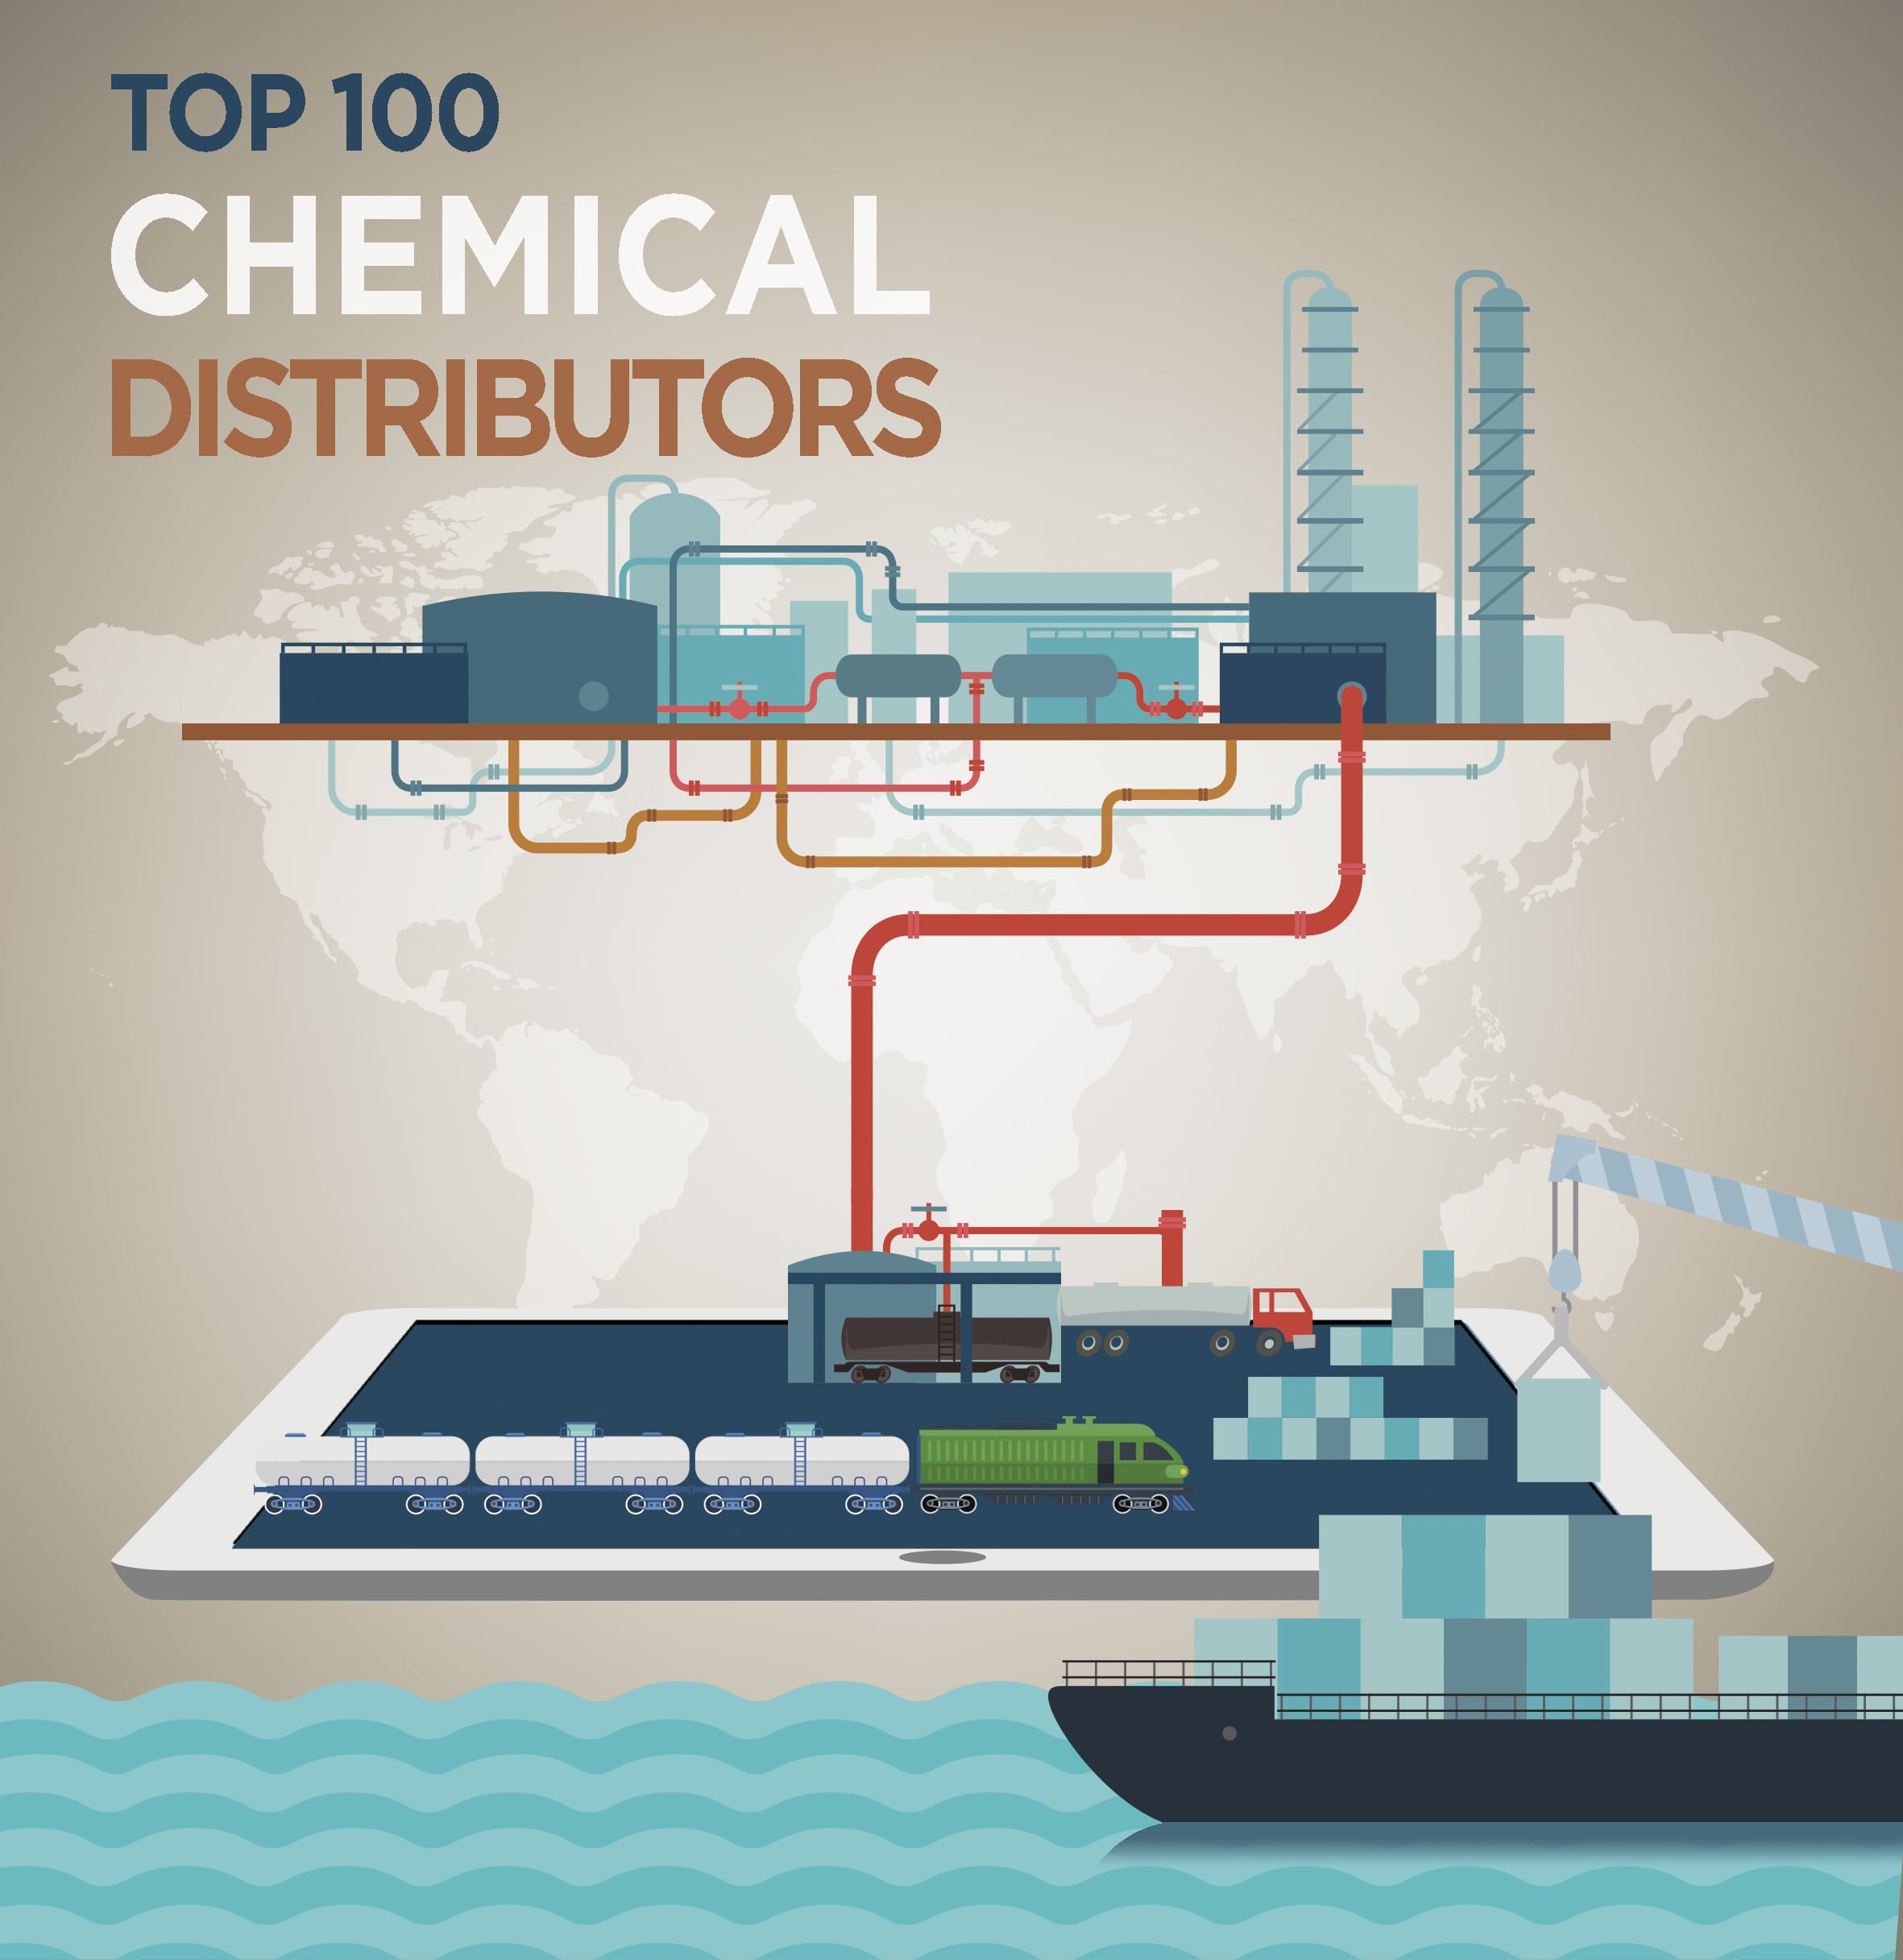 icb-p301-top100-chemical-distributors-c-Shirley-Xiao_RBI